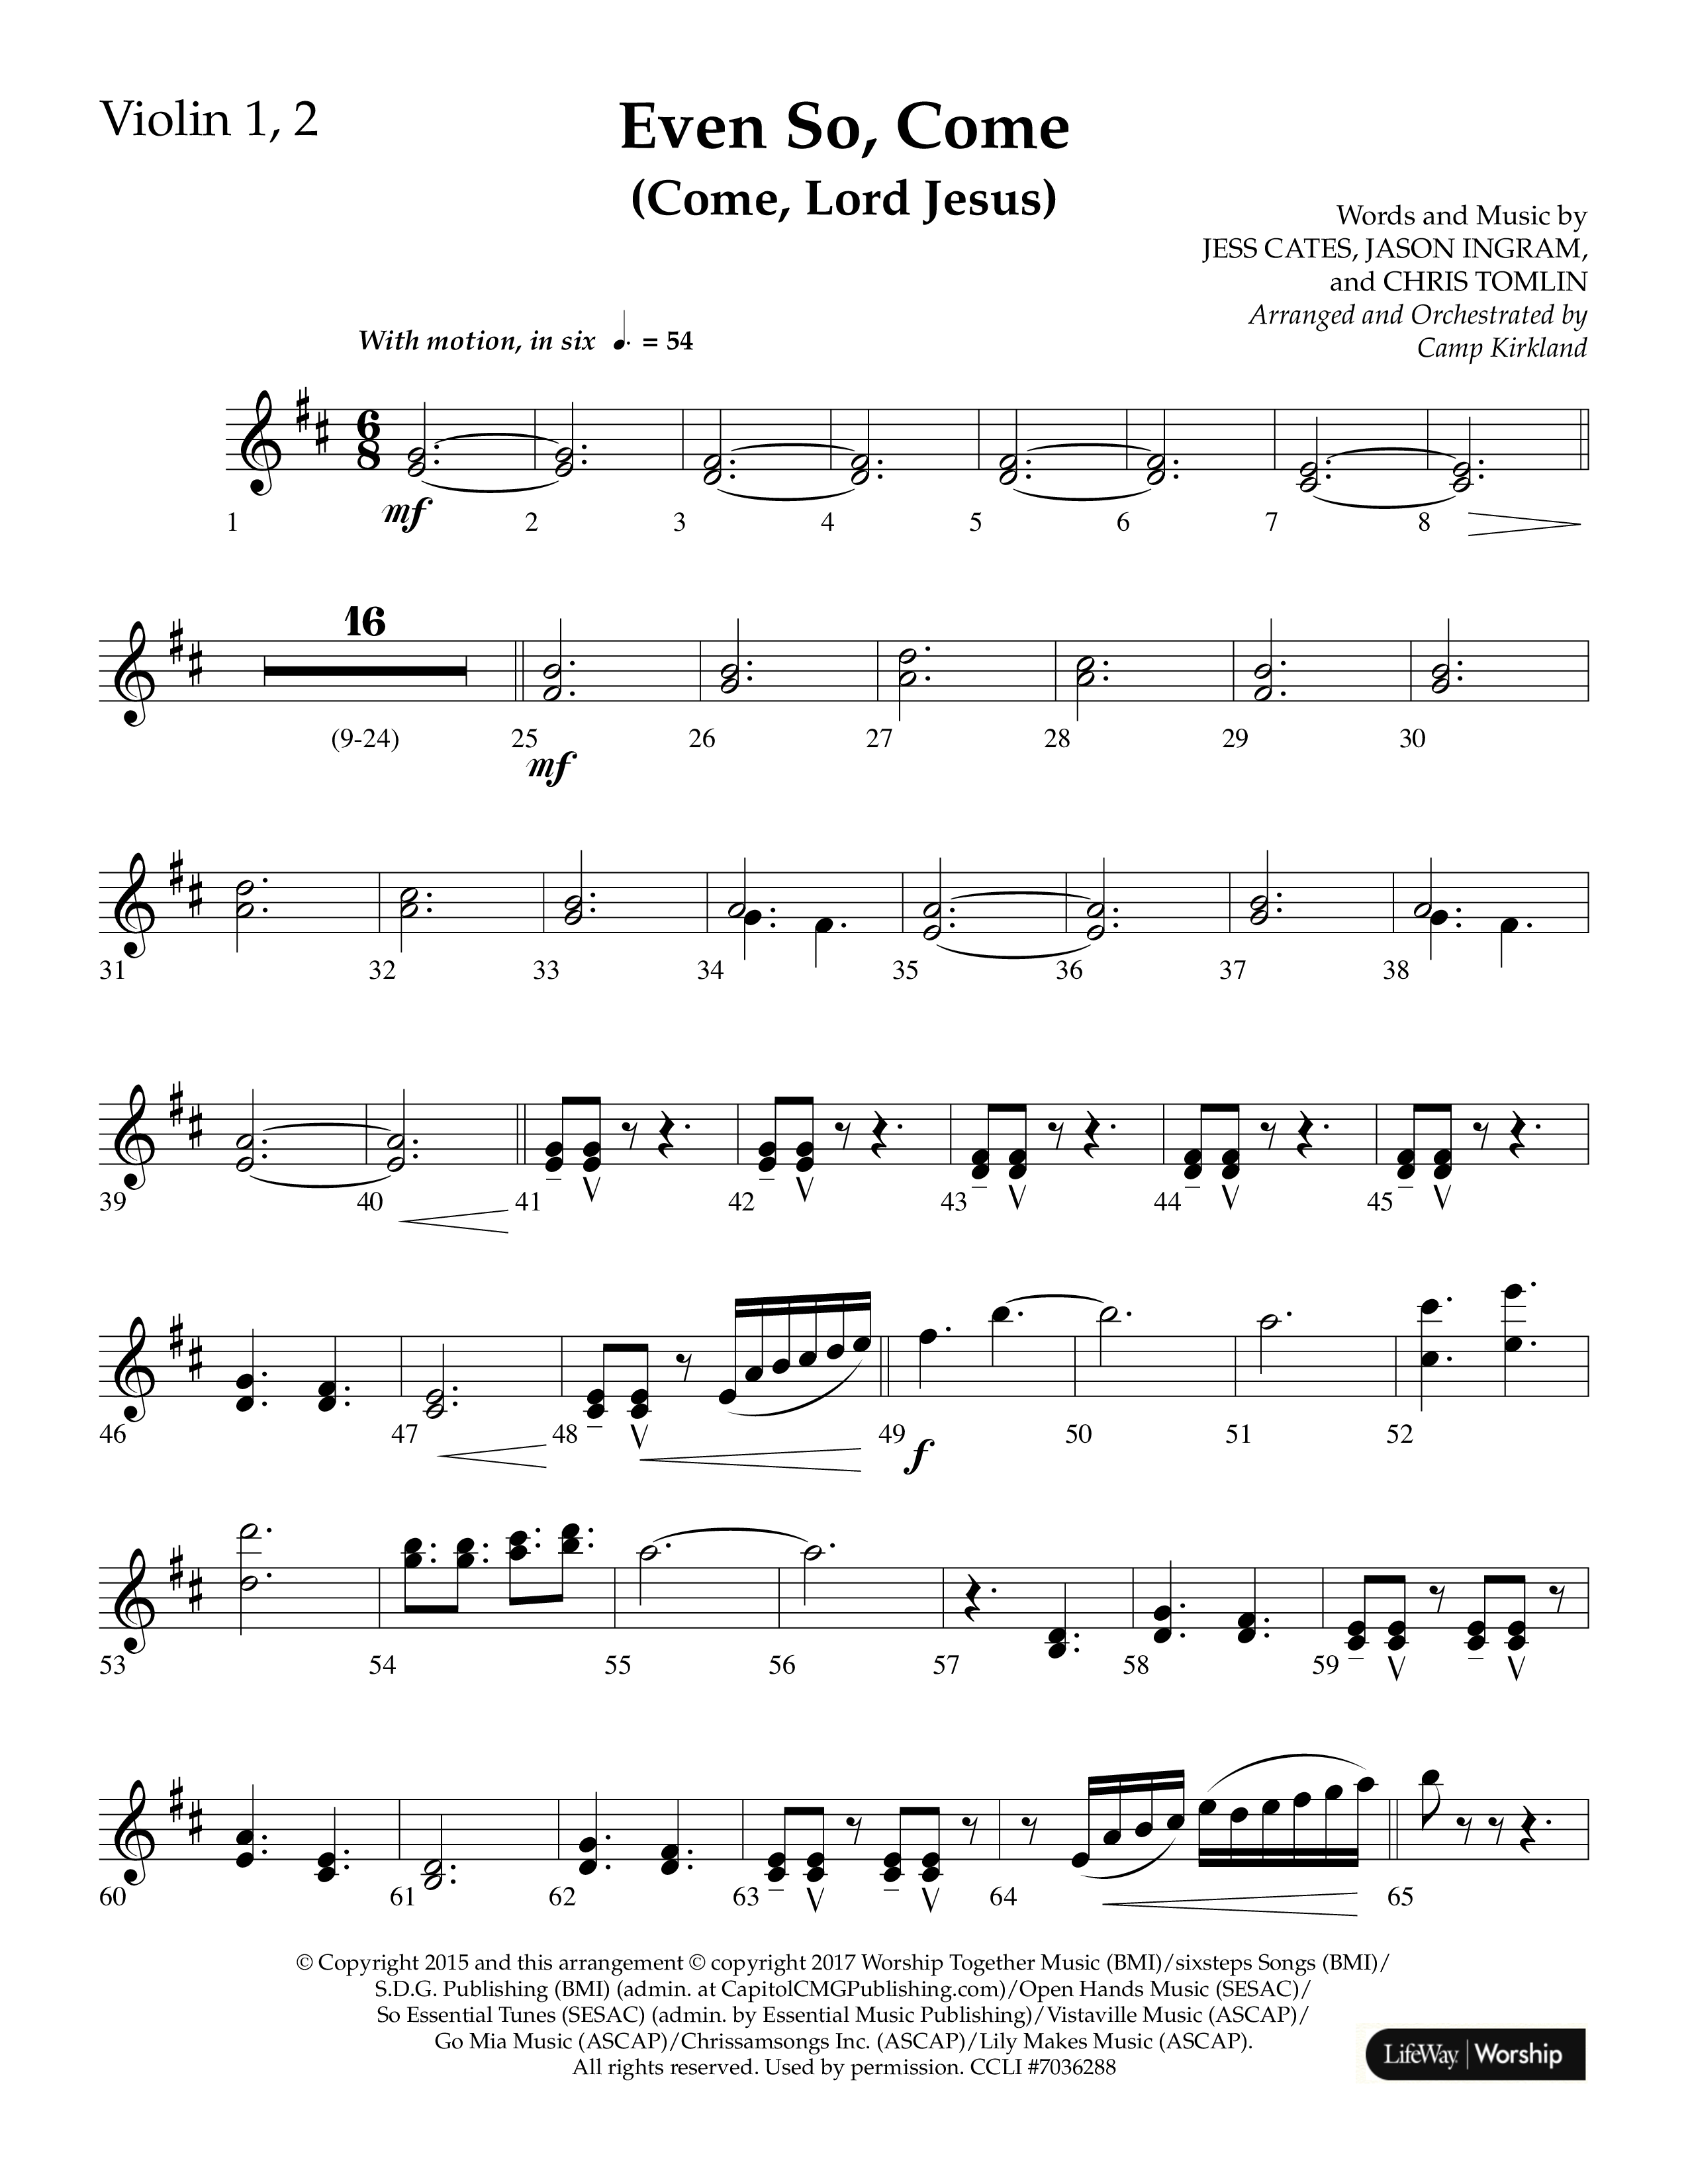 Even So Come (Choral Anthem SATB) Violin 1/2 (Lifeway Choral / Arr. Camp Kirkland)